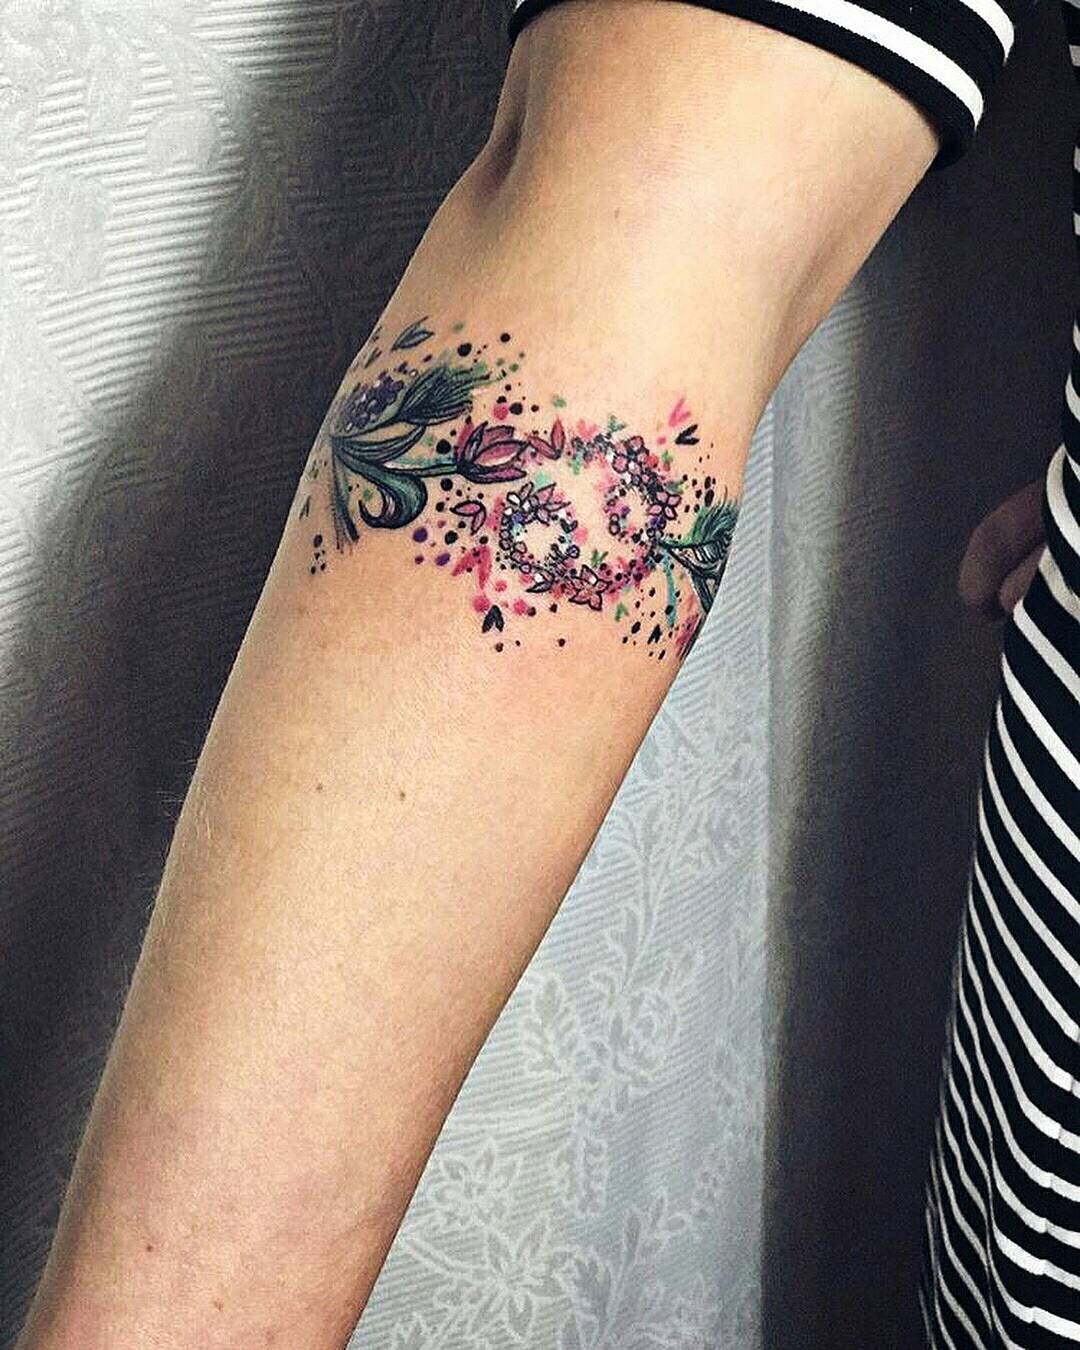  — Colorful Arm Band Tattoo Artist: dnes_tetujem